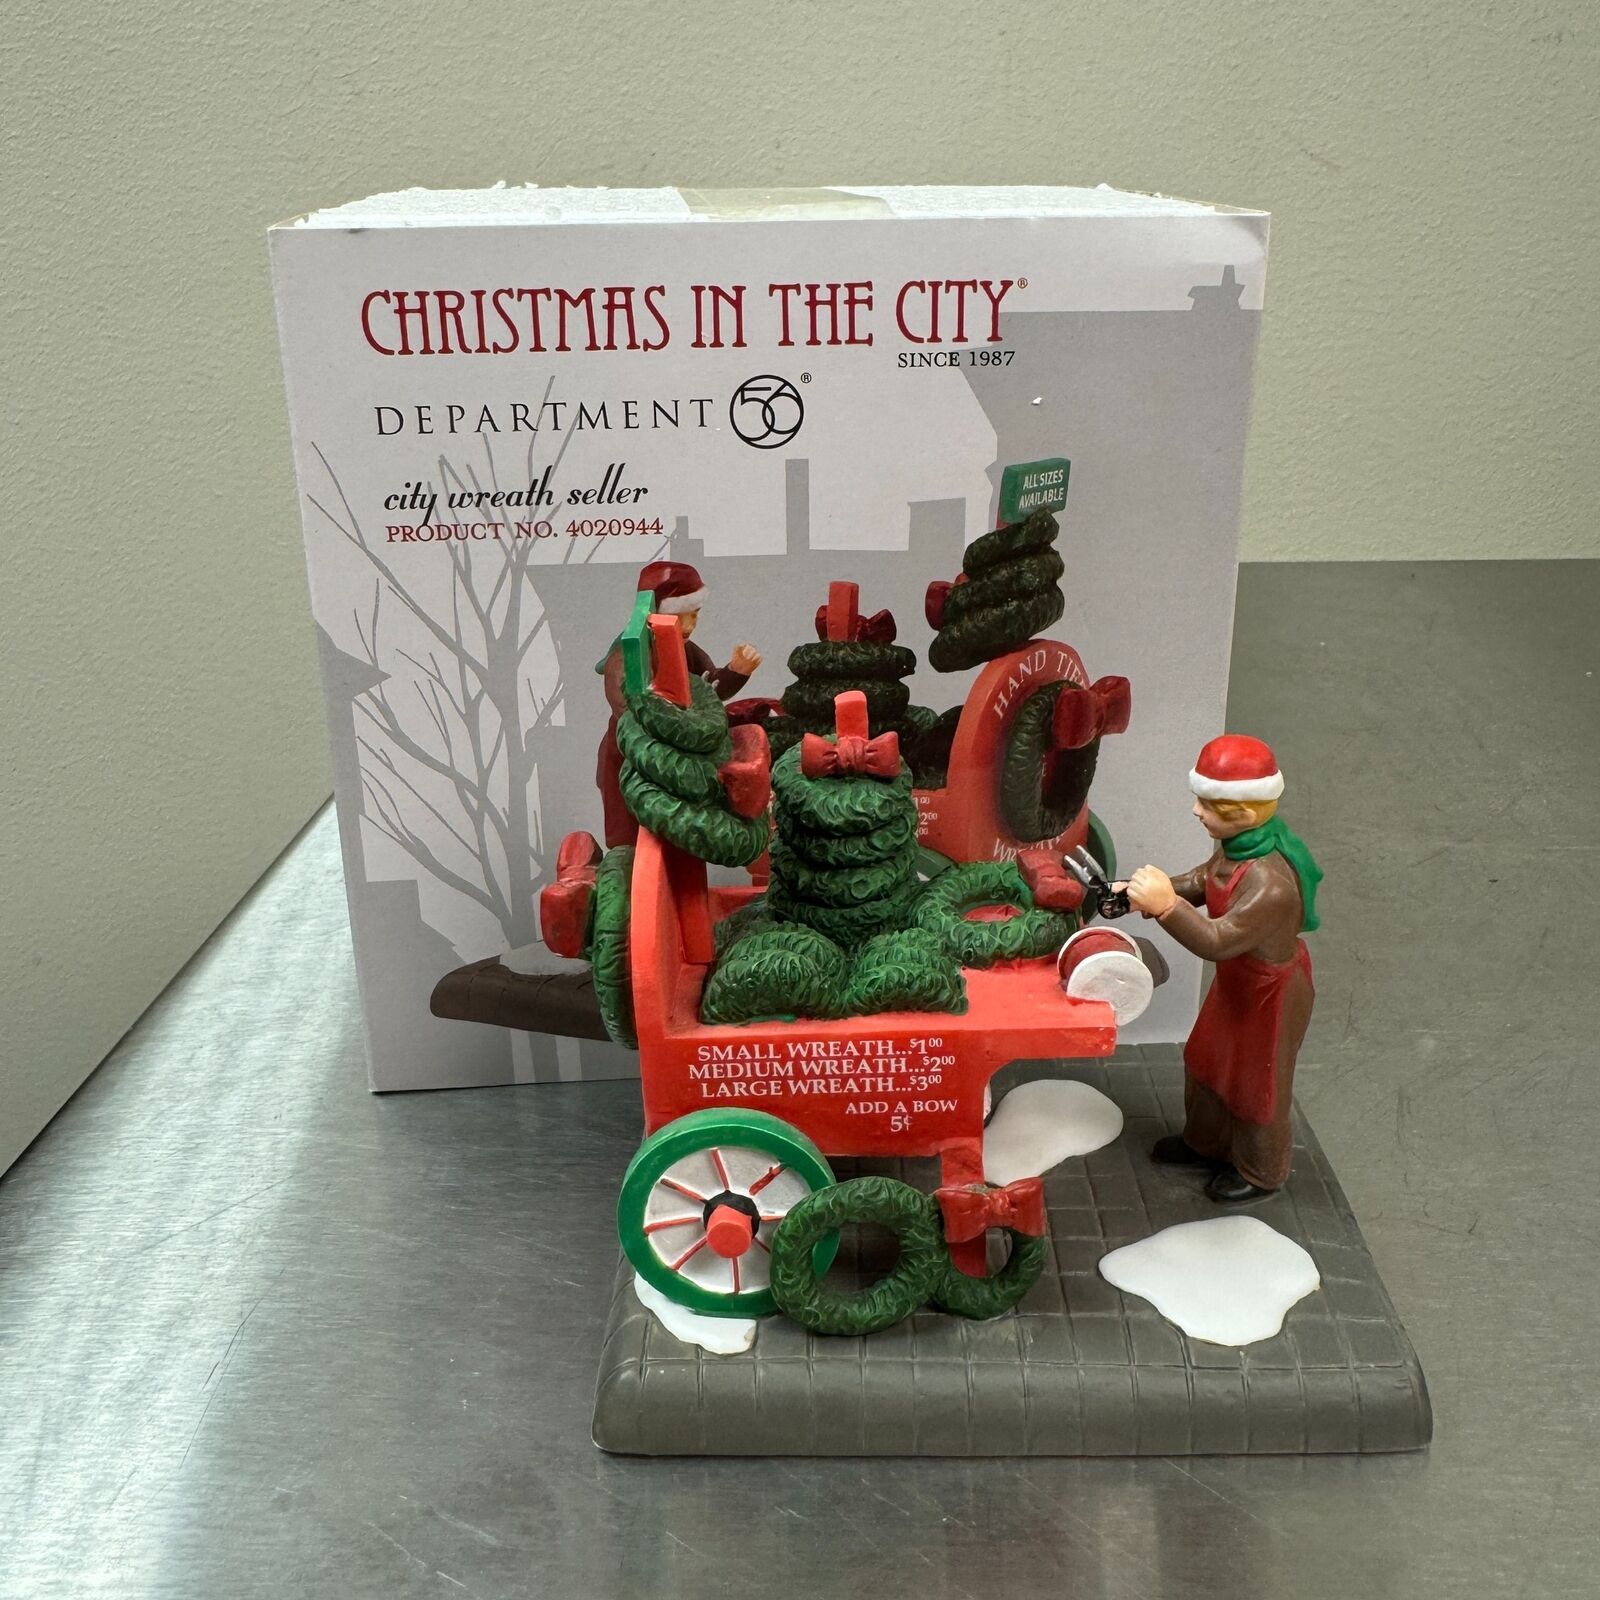 Department 56 City Wreath Seller #4020944 Christmas in the City Figurine OOP